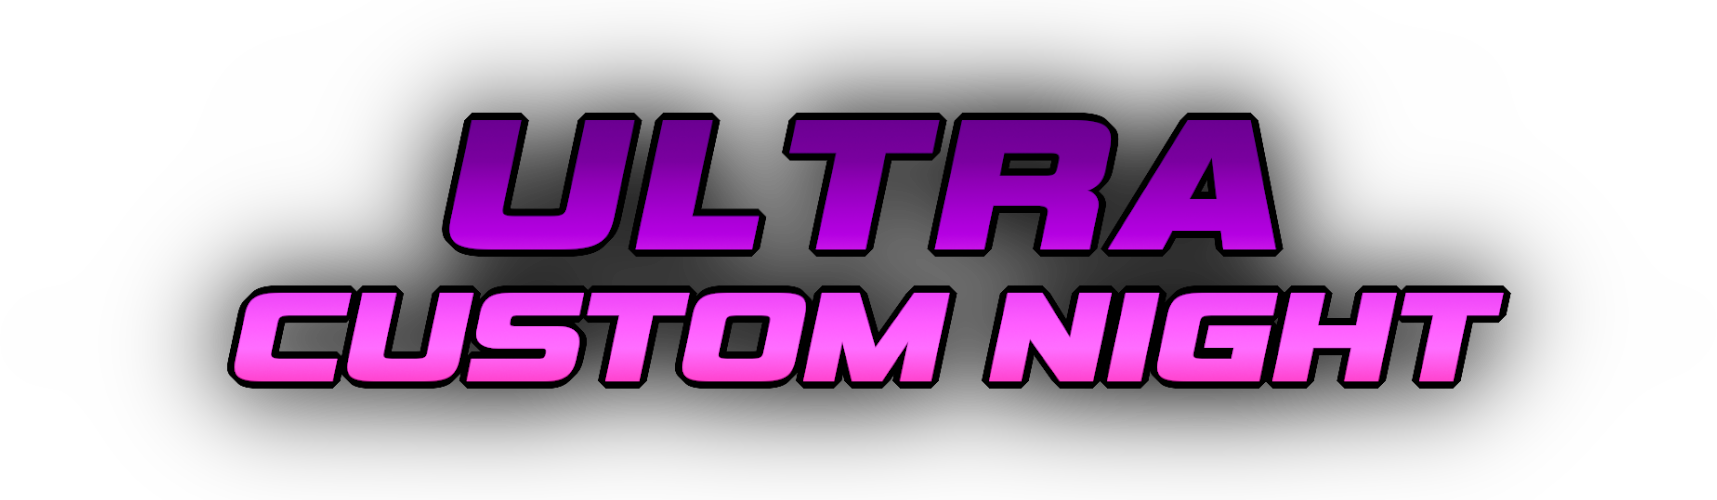 Ultimate Custom Night Purple png download - 518*539 - Free